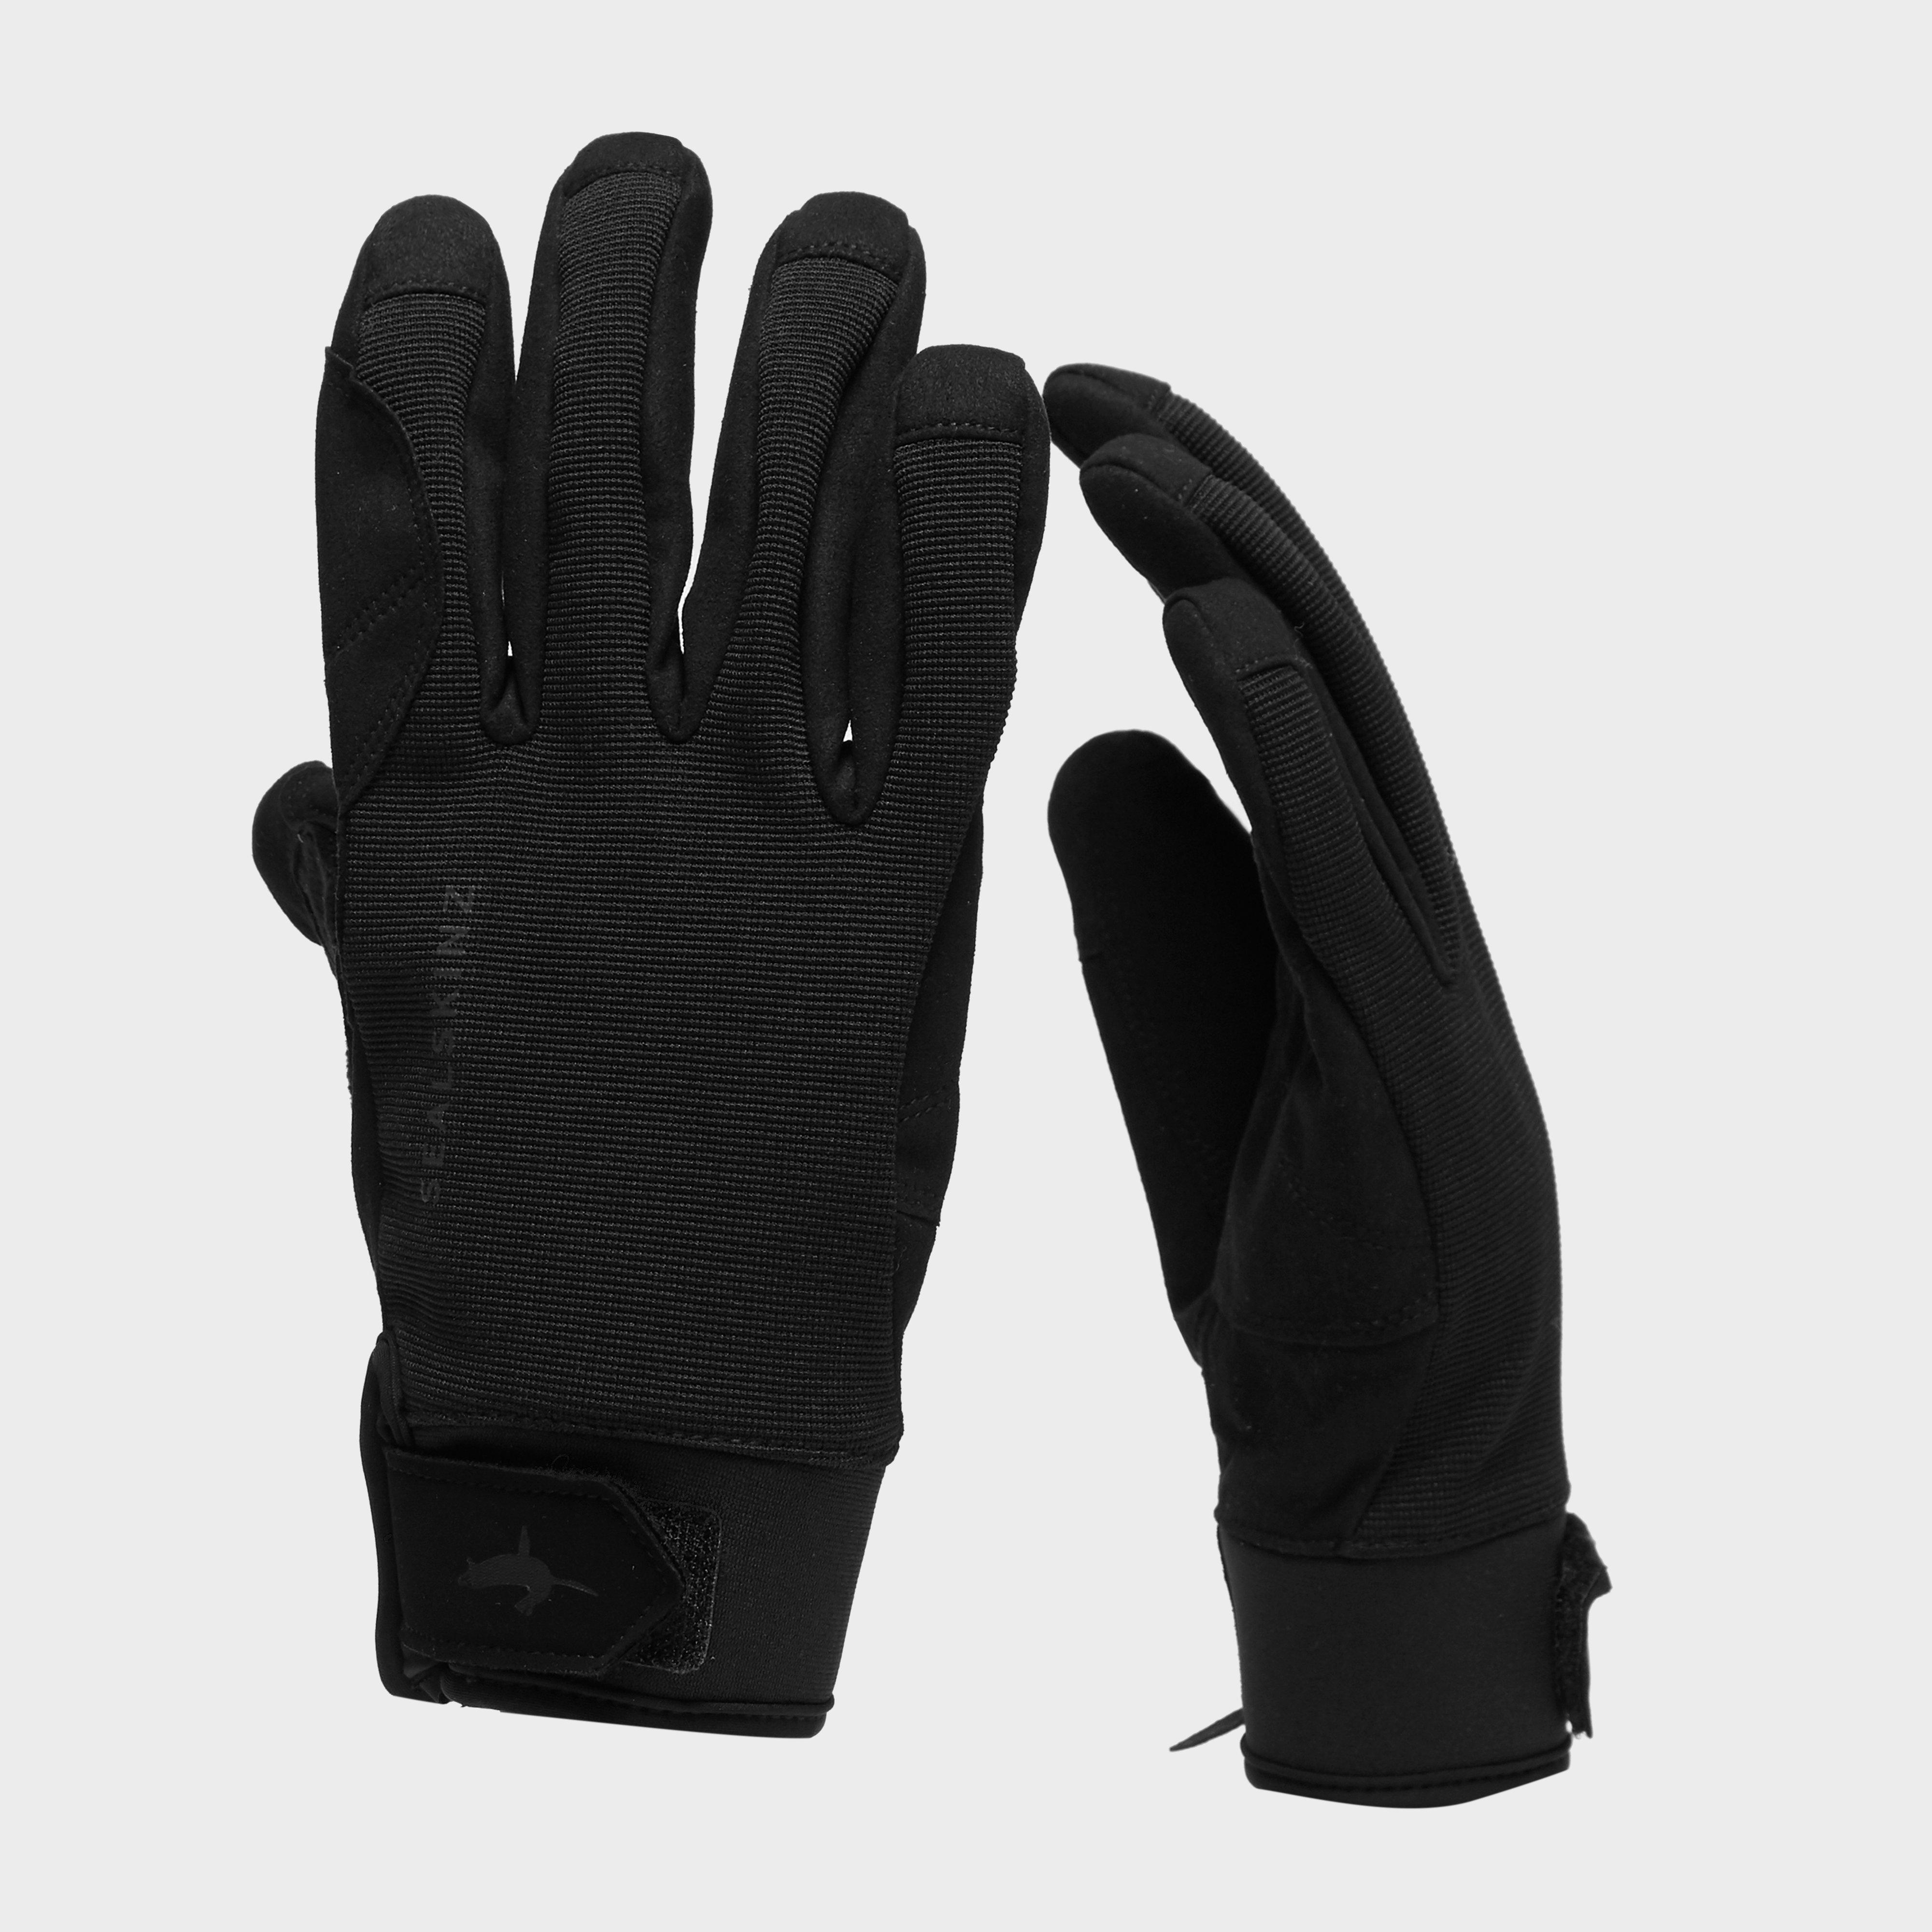  Sealskinz Waterproof All Weather Glove, Black